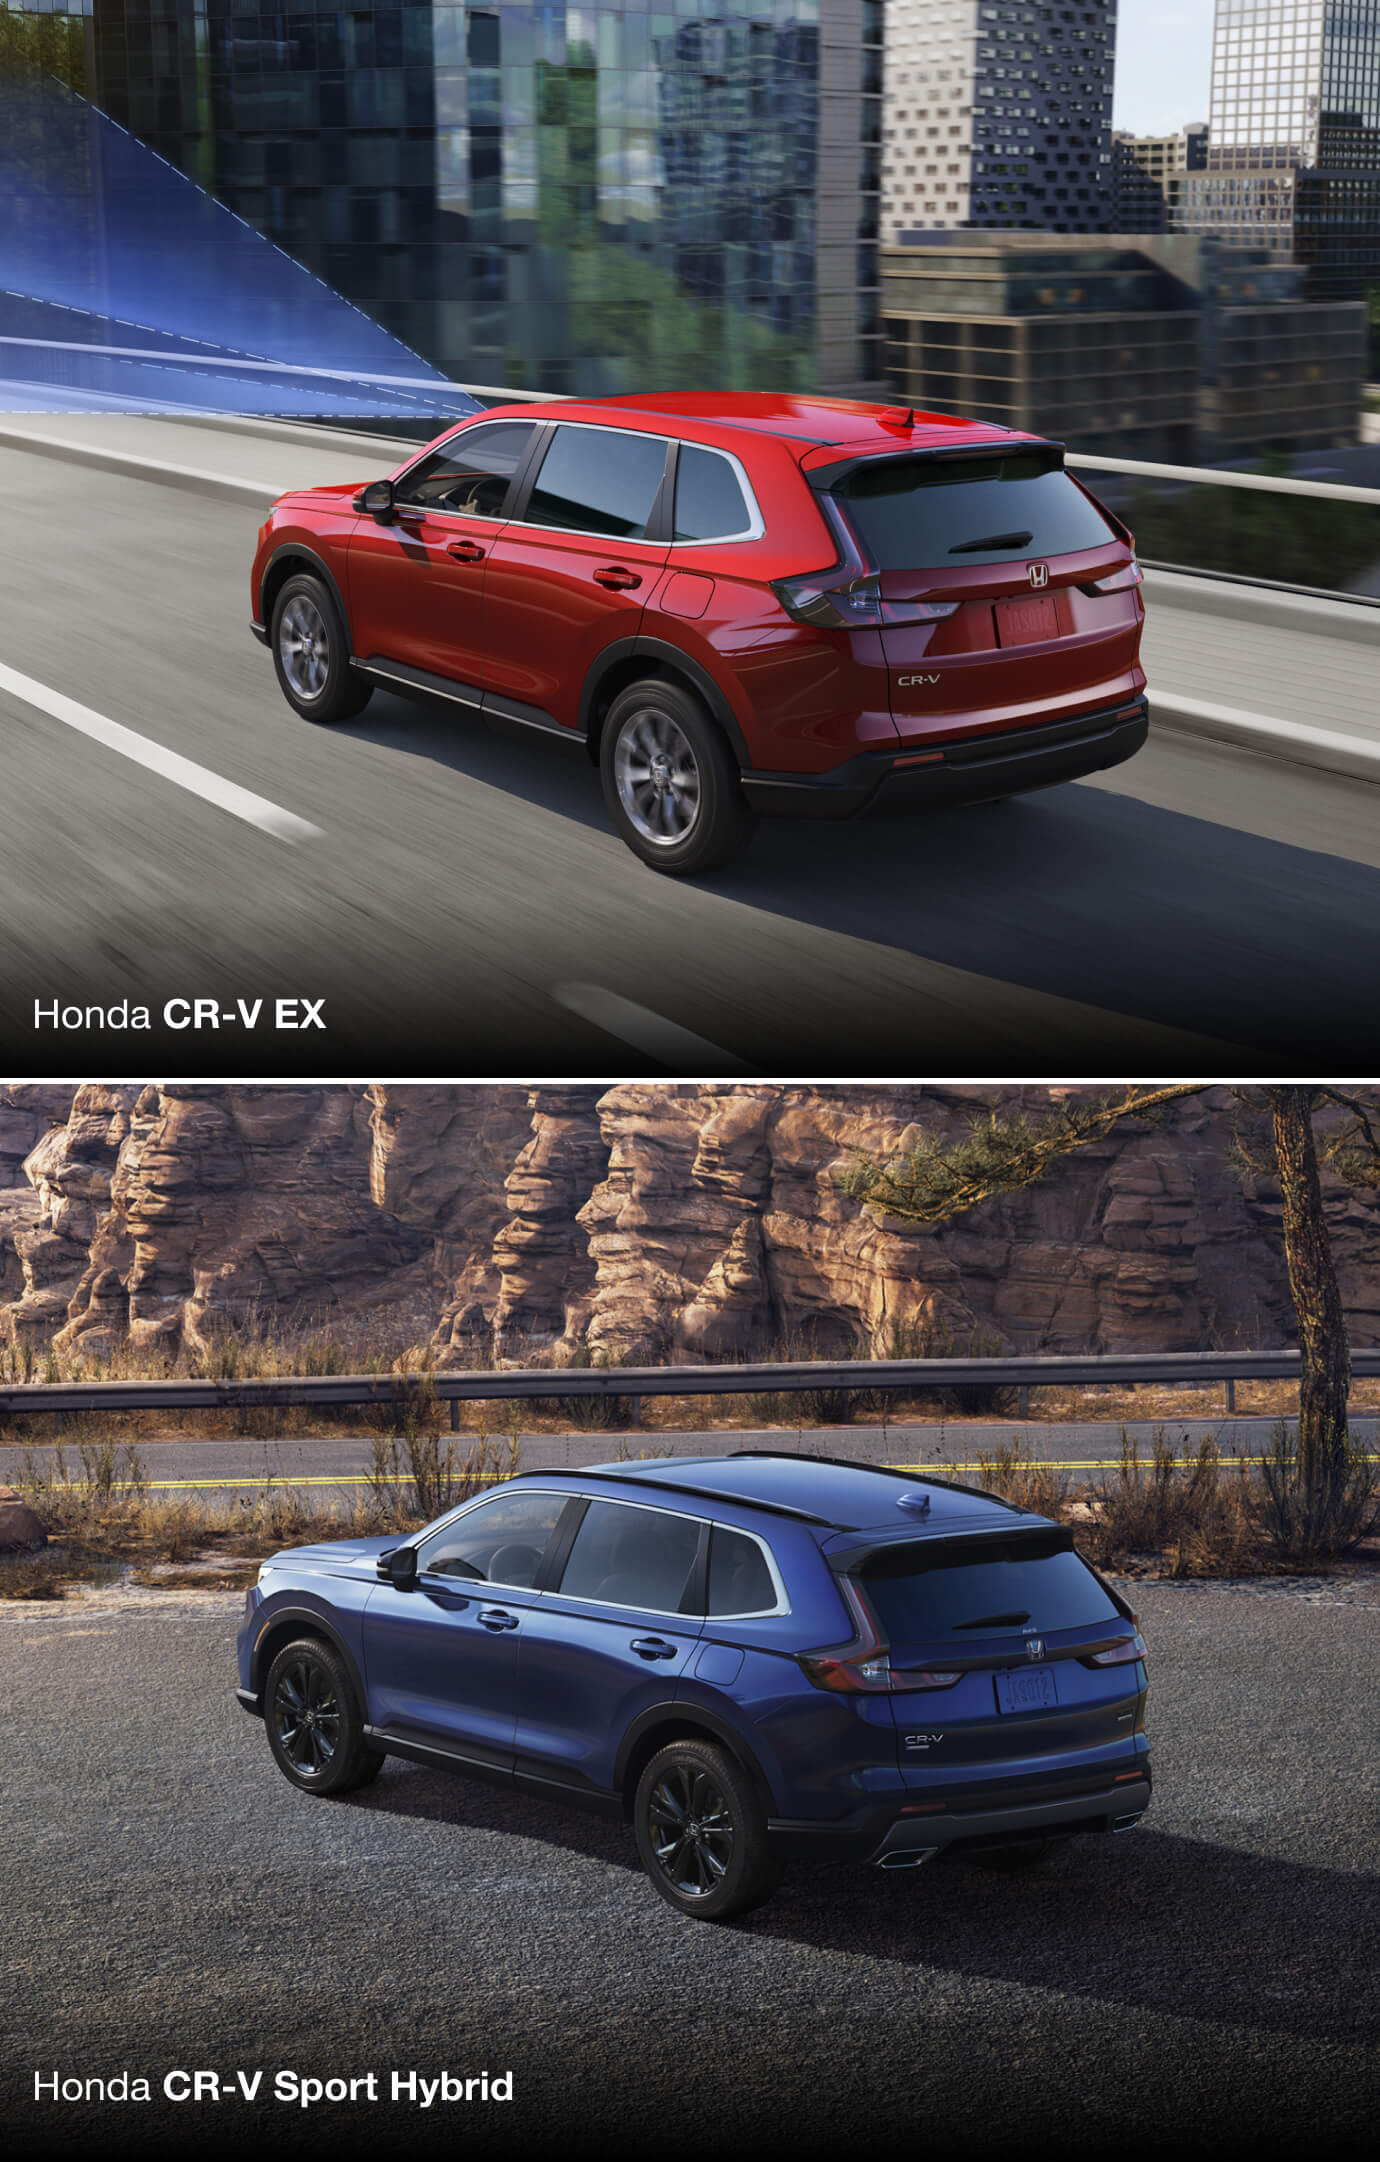 collage image of a Honda CR-V Honda CR-V Hybrid